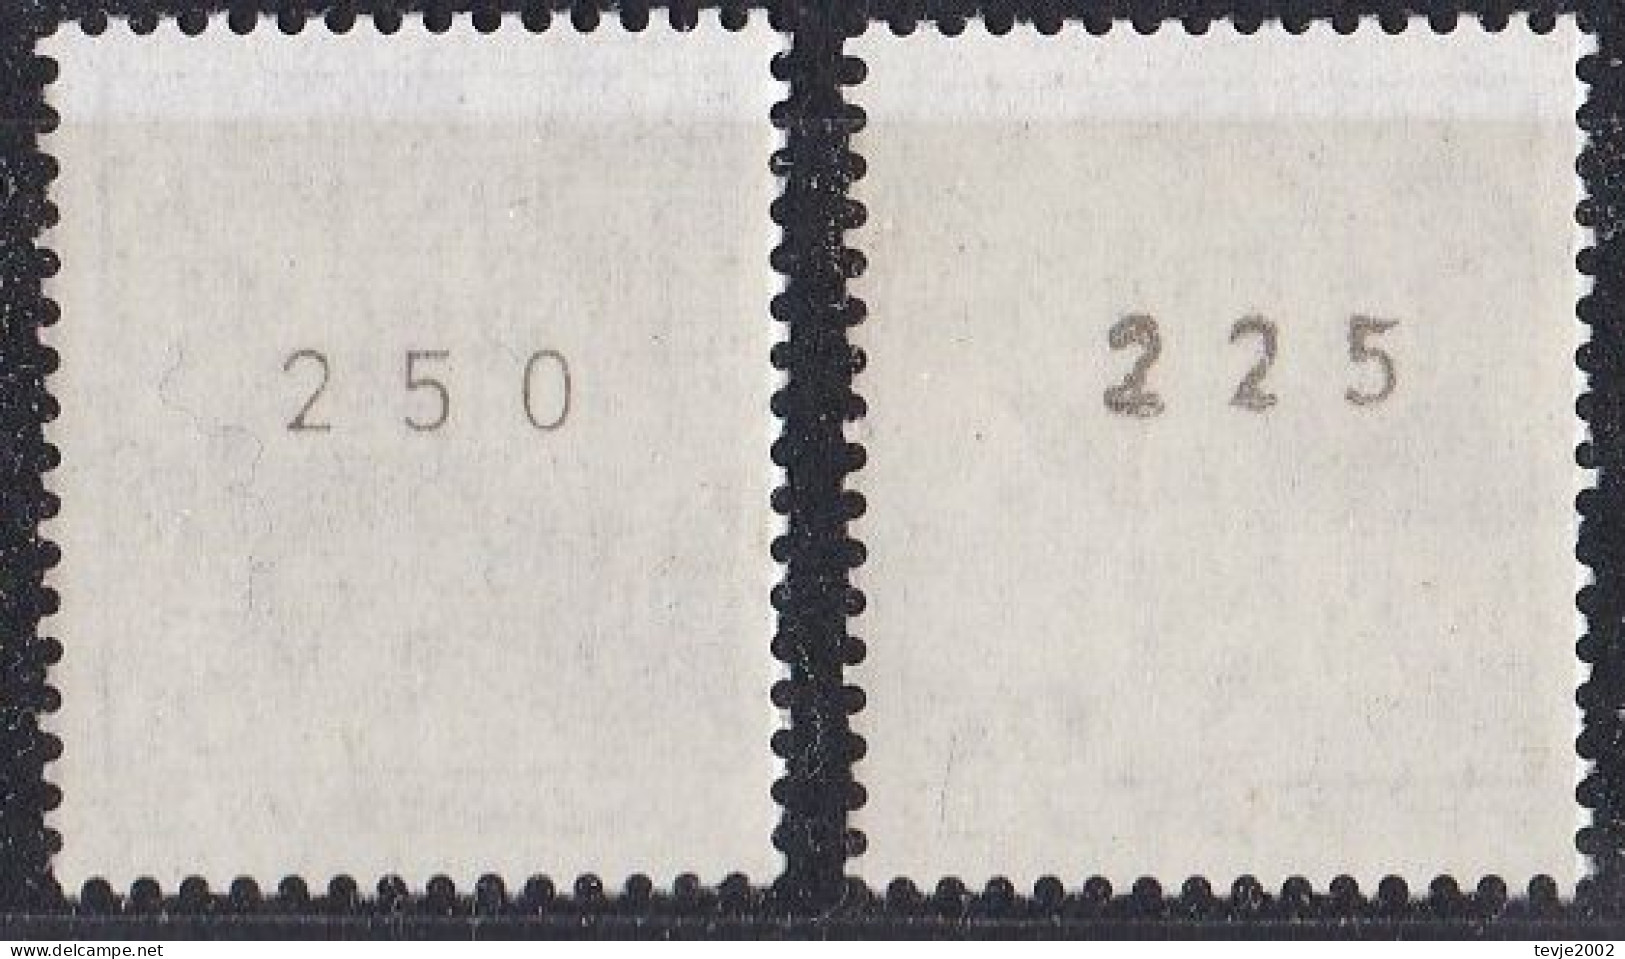 Berlin 1987 - Rollenmarken Mi.Nr. 532 AII + 534 AII - Postfrisch MNH - Letterset Mit Nummern - Rollo De Sellos